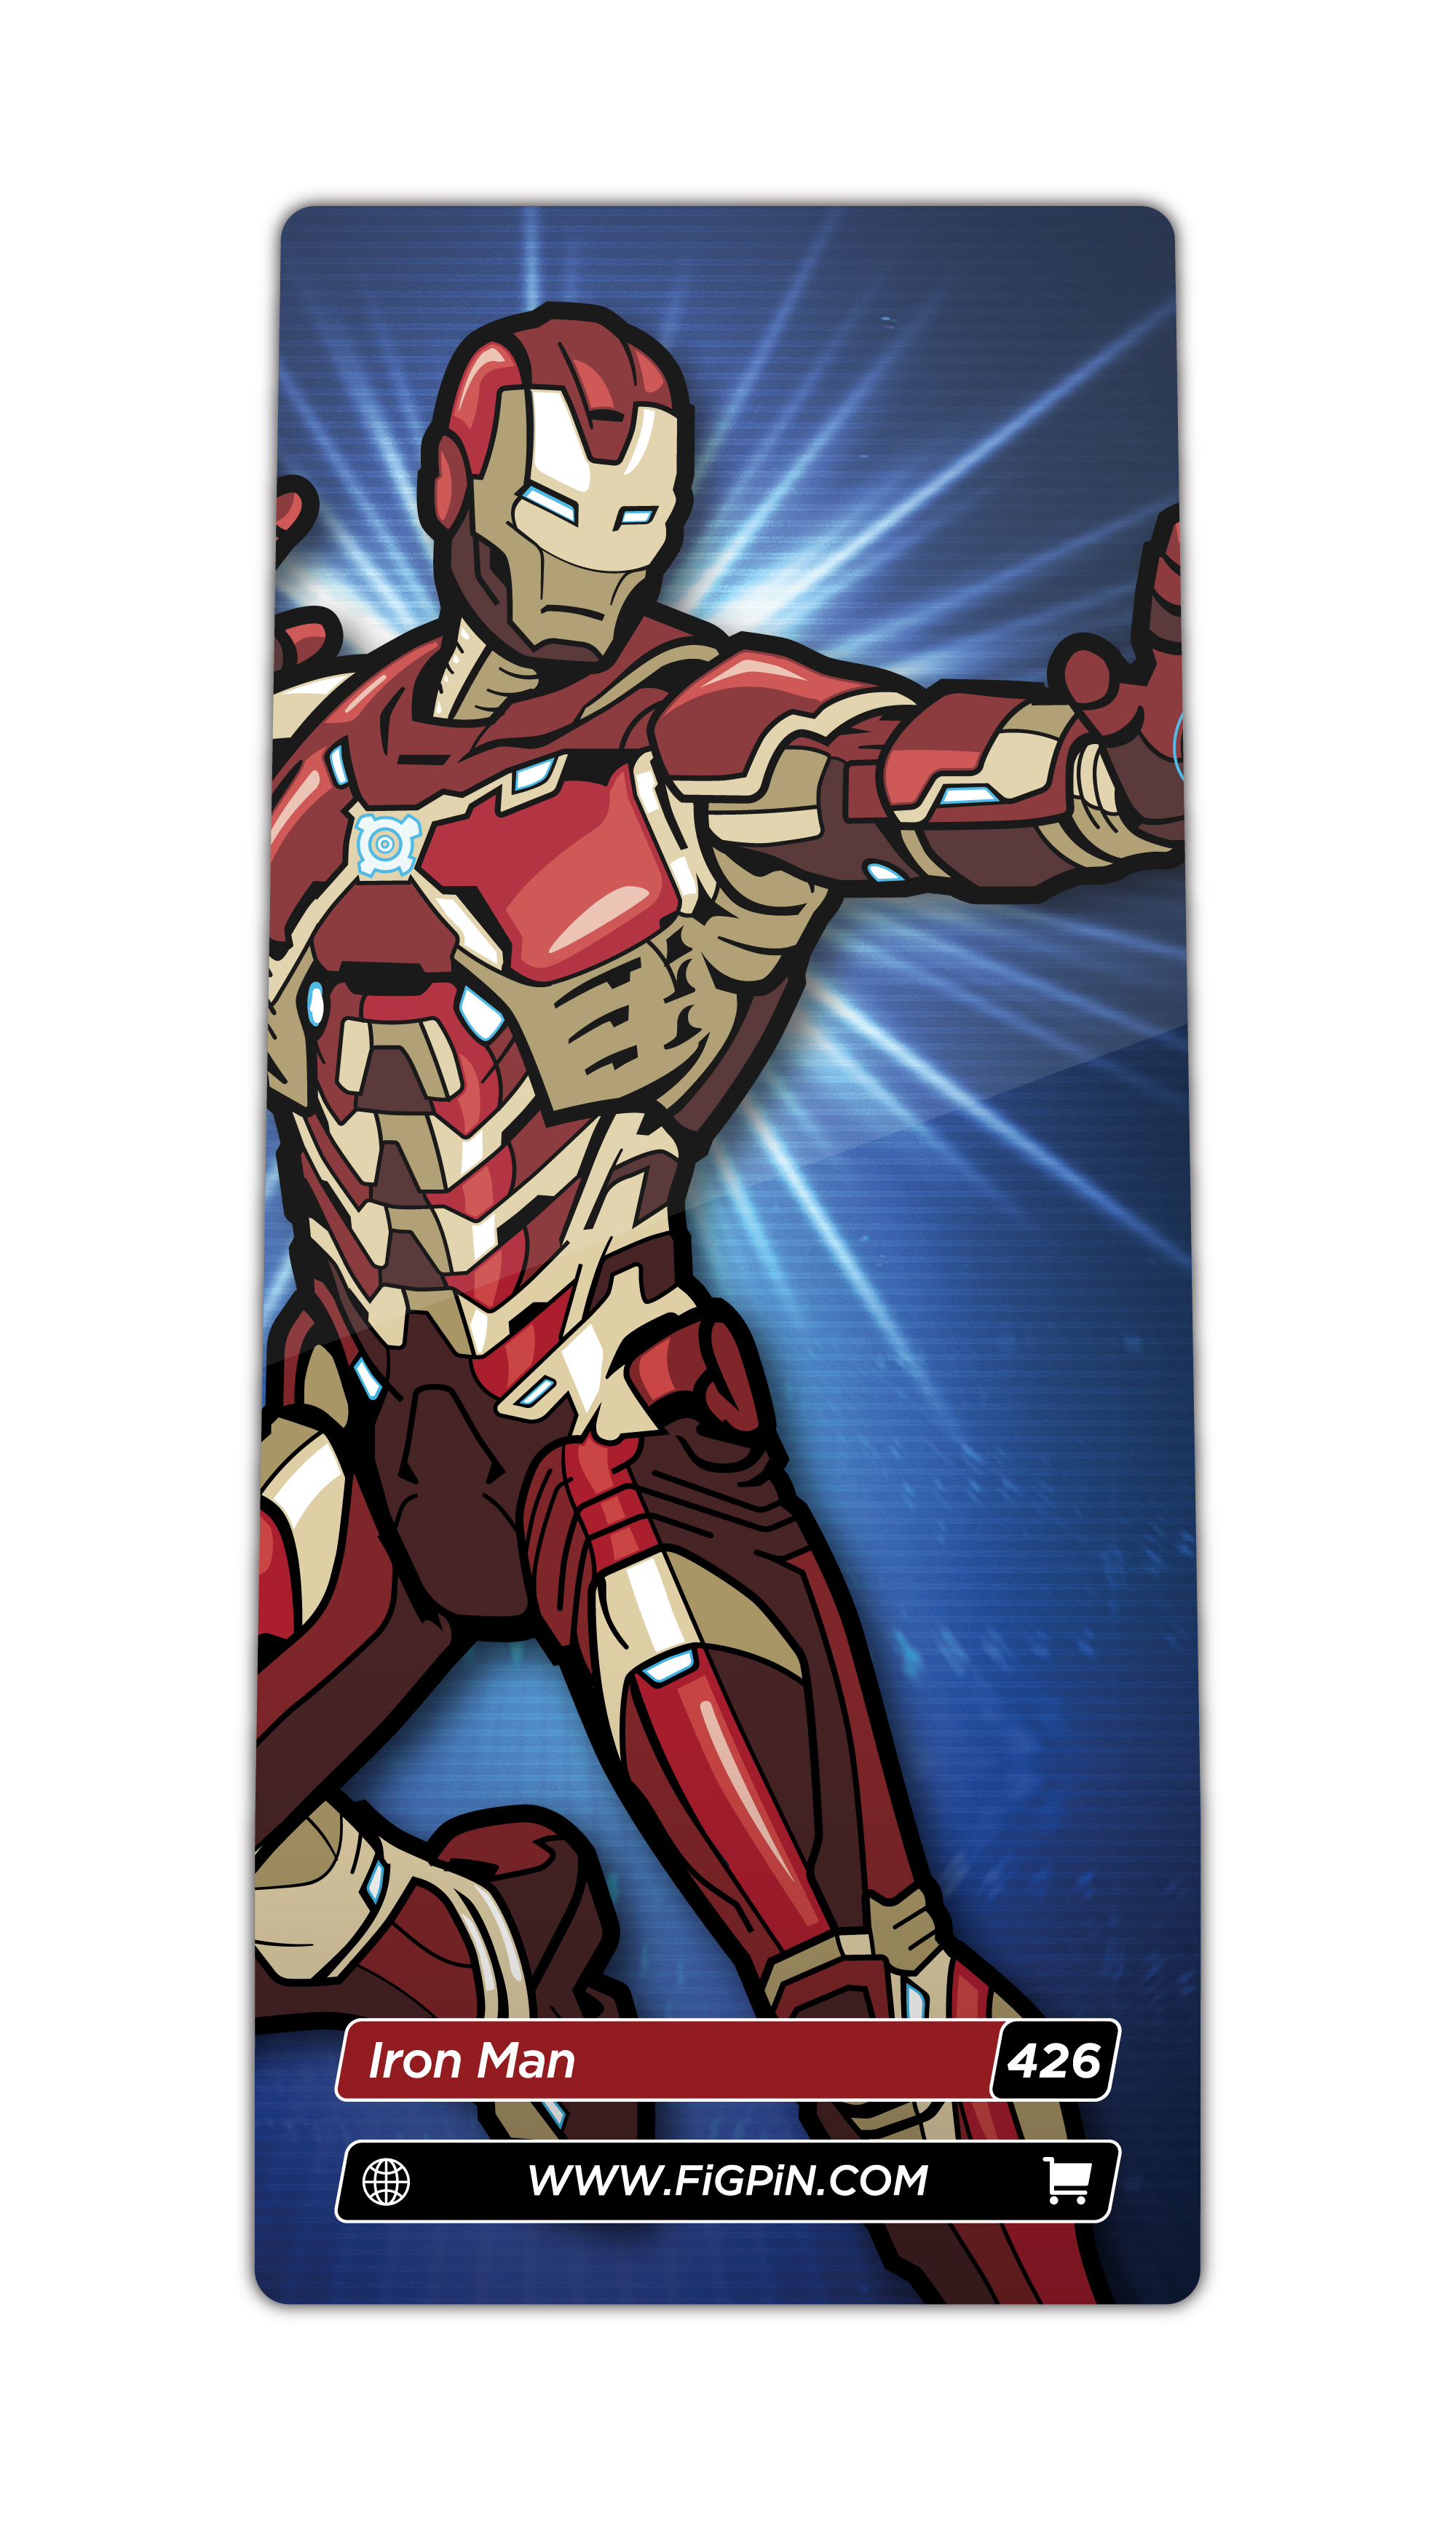 Details about   2020 Marvel Avengers Figpin IRON MAN #426 Exclusive Square Enix Figure Pin! 